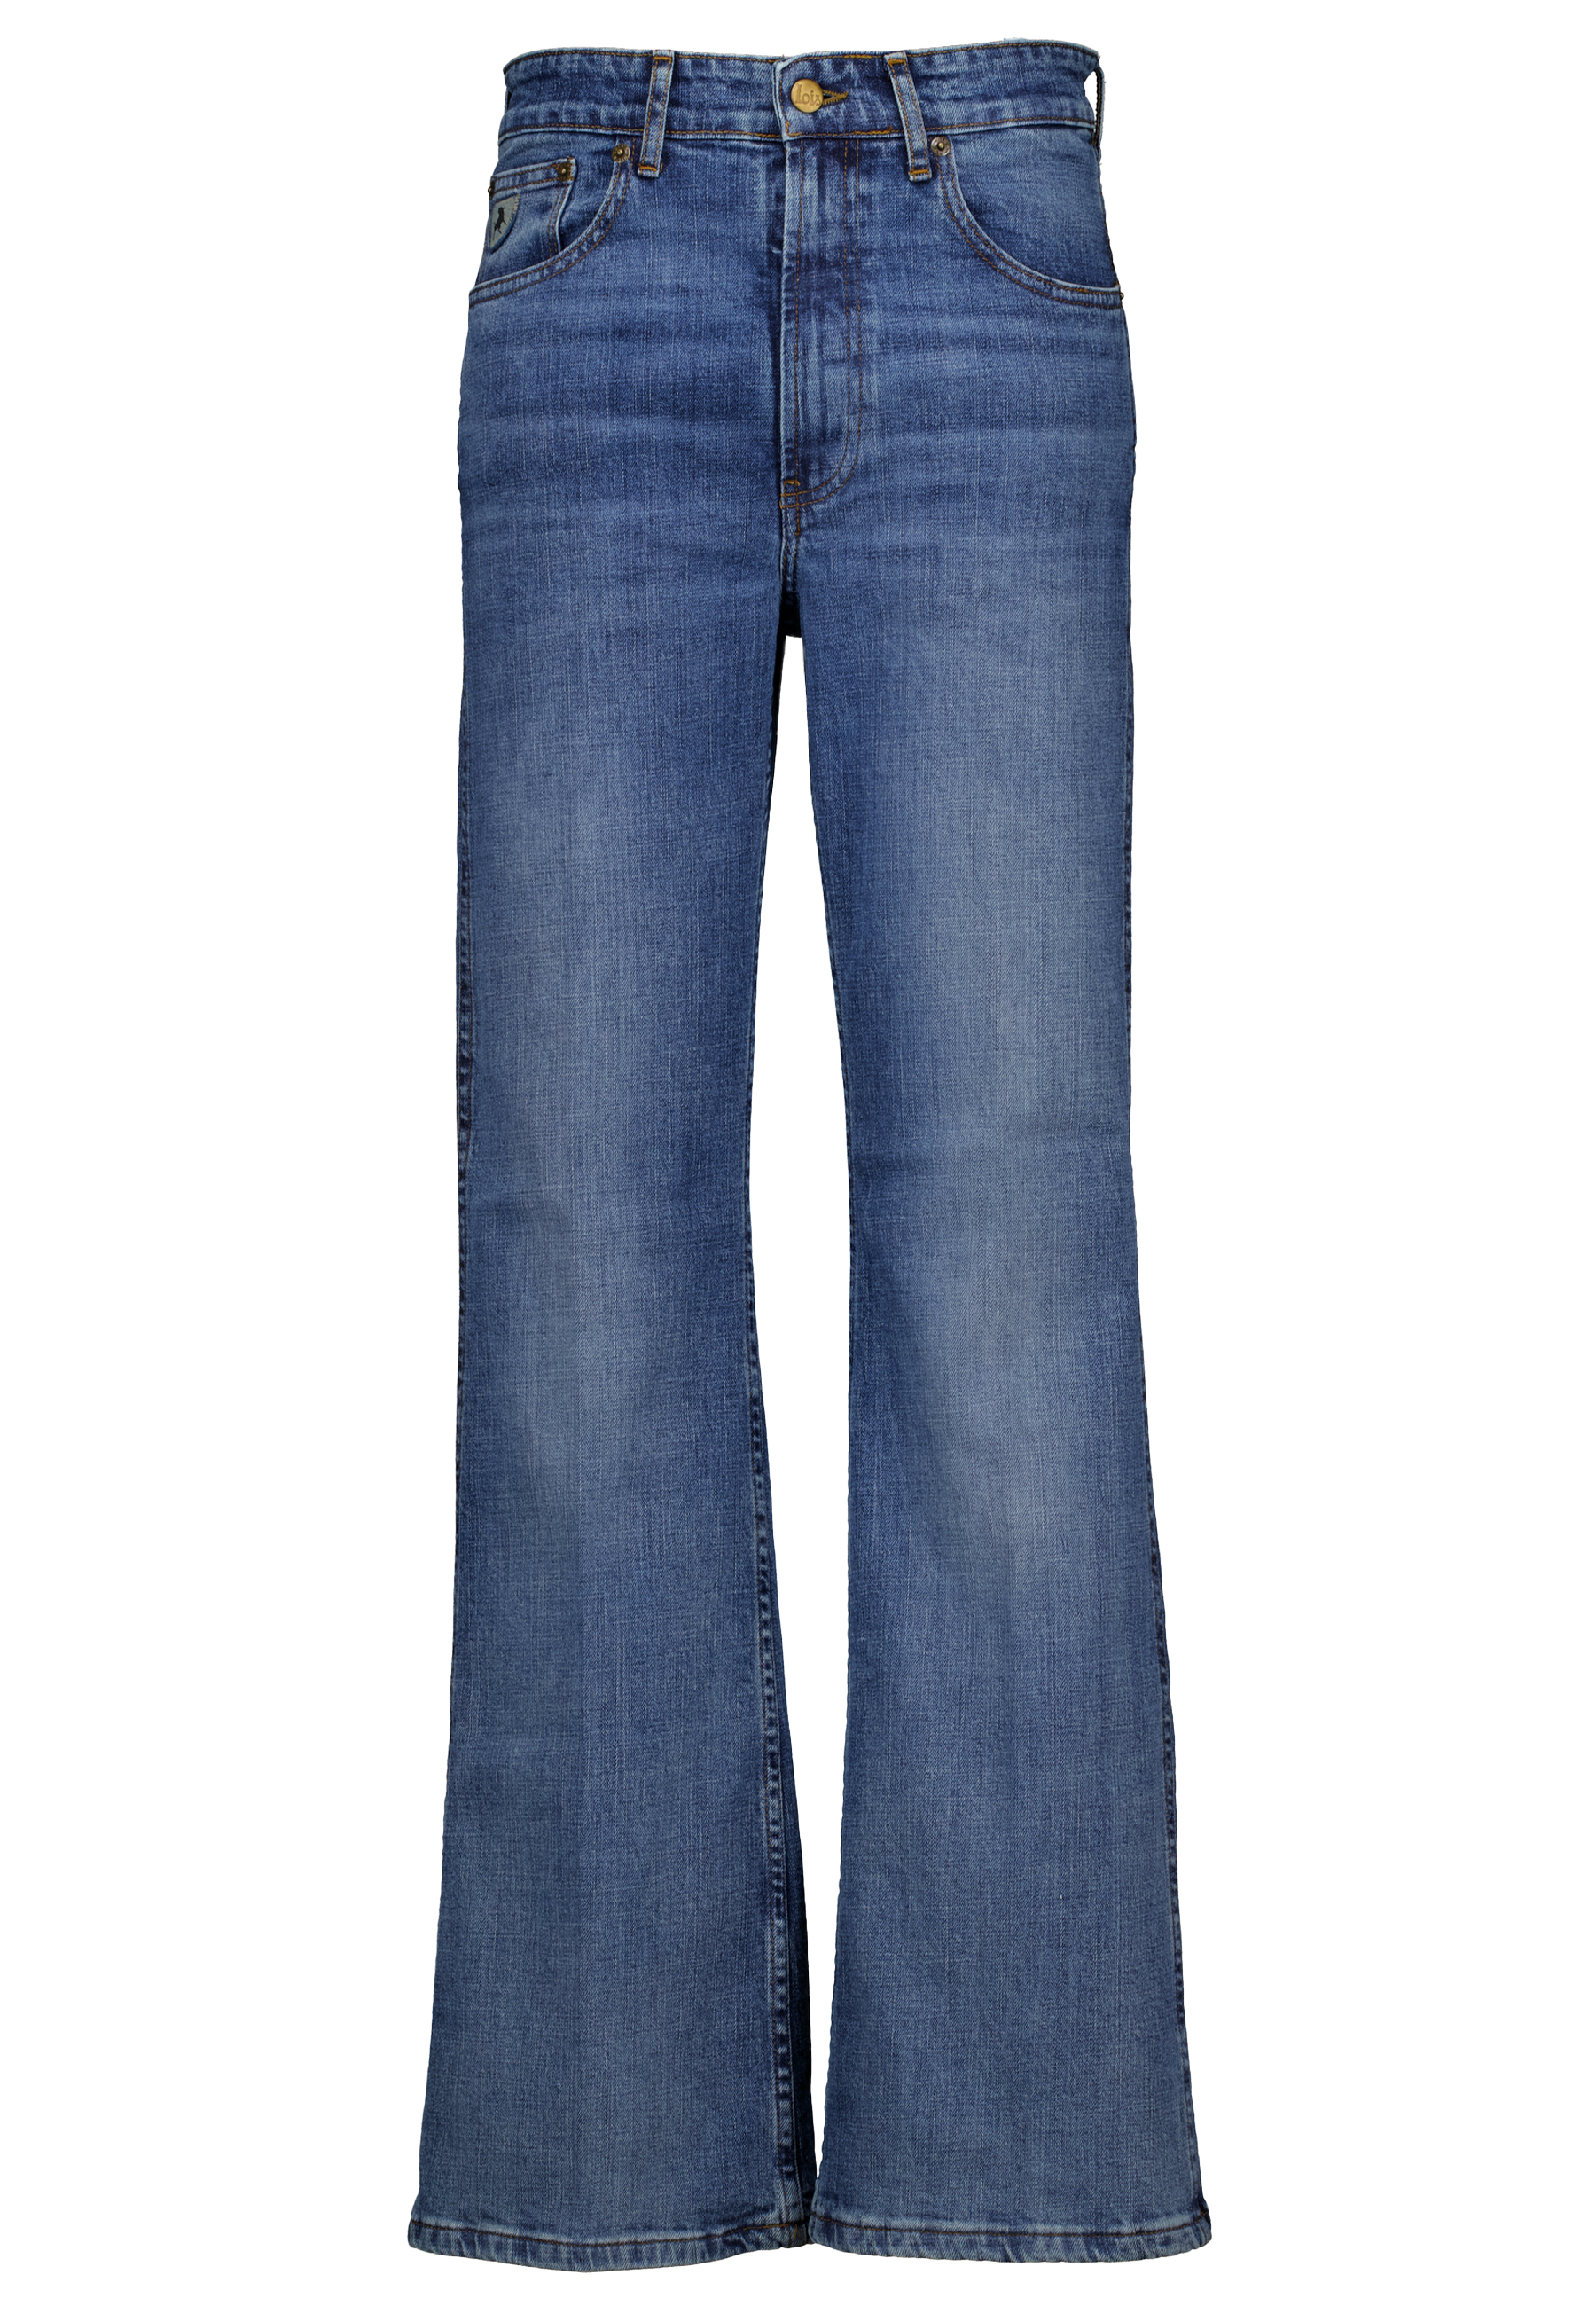 Lois Riley jeans blauw Dames maat 29/32